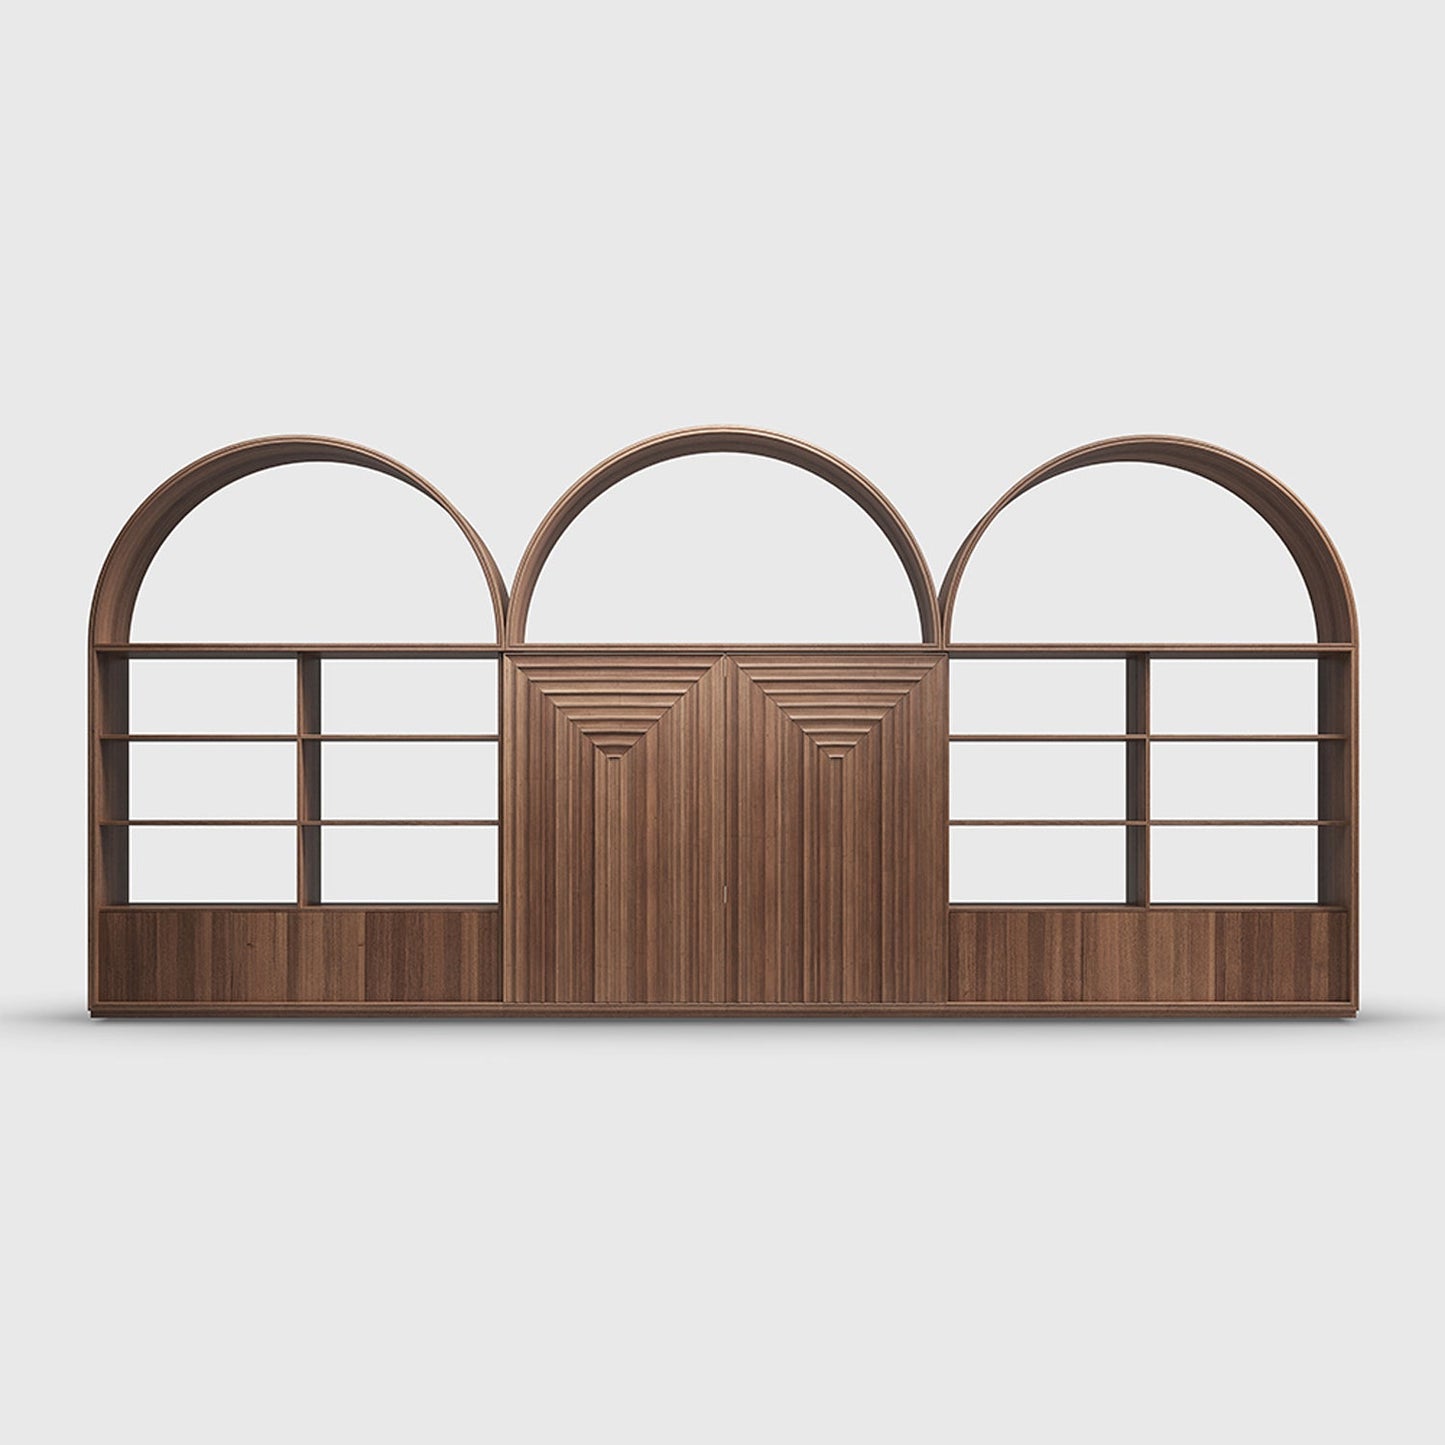 Wooden Shelf Arc - UKRAINIAN PRODUCT DESIGN